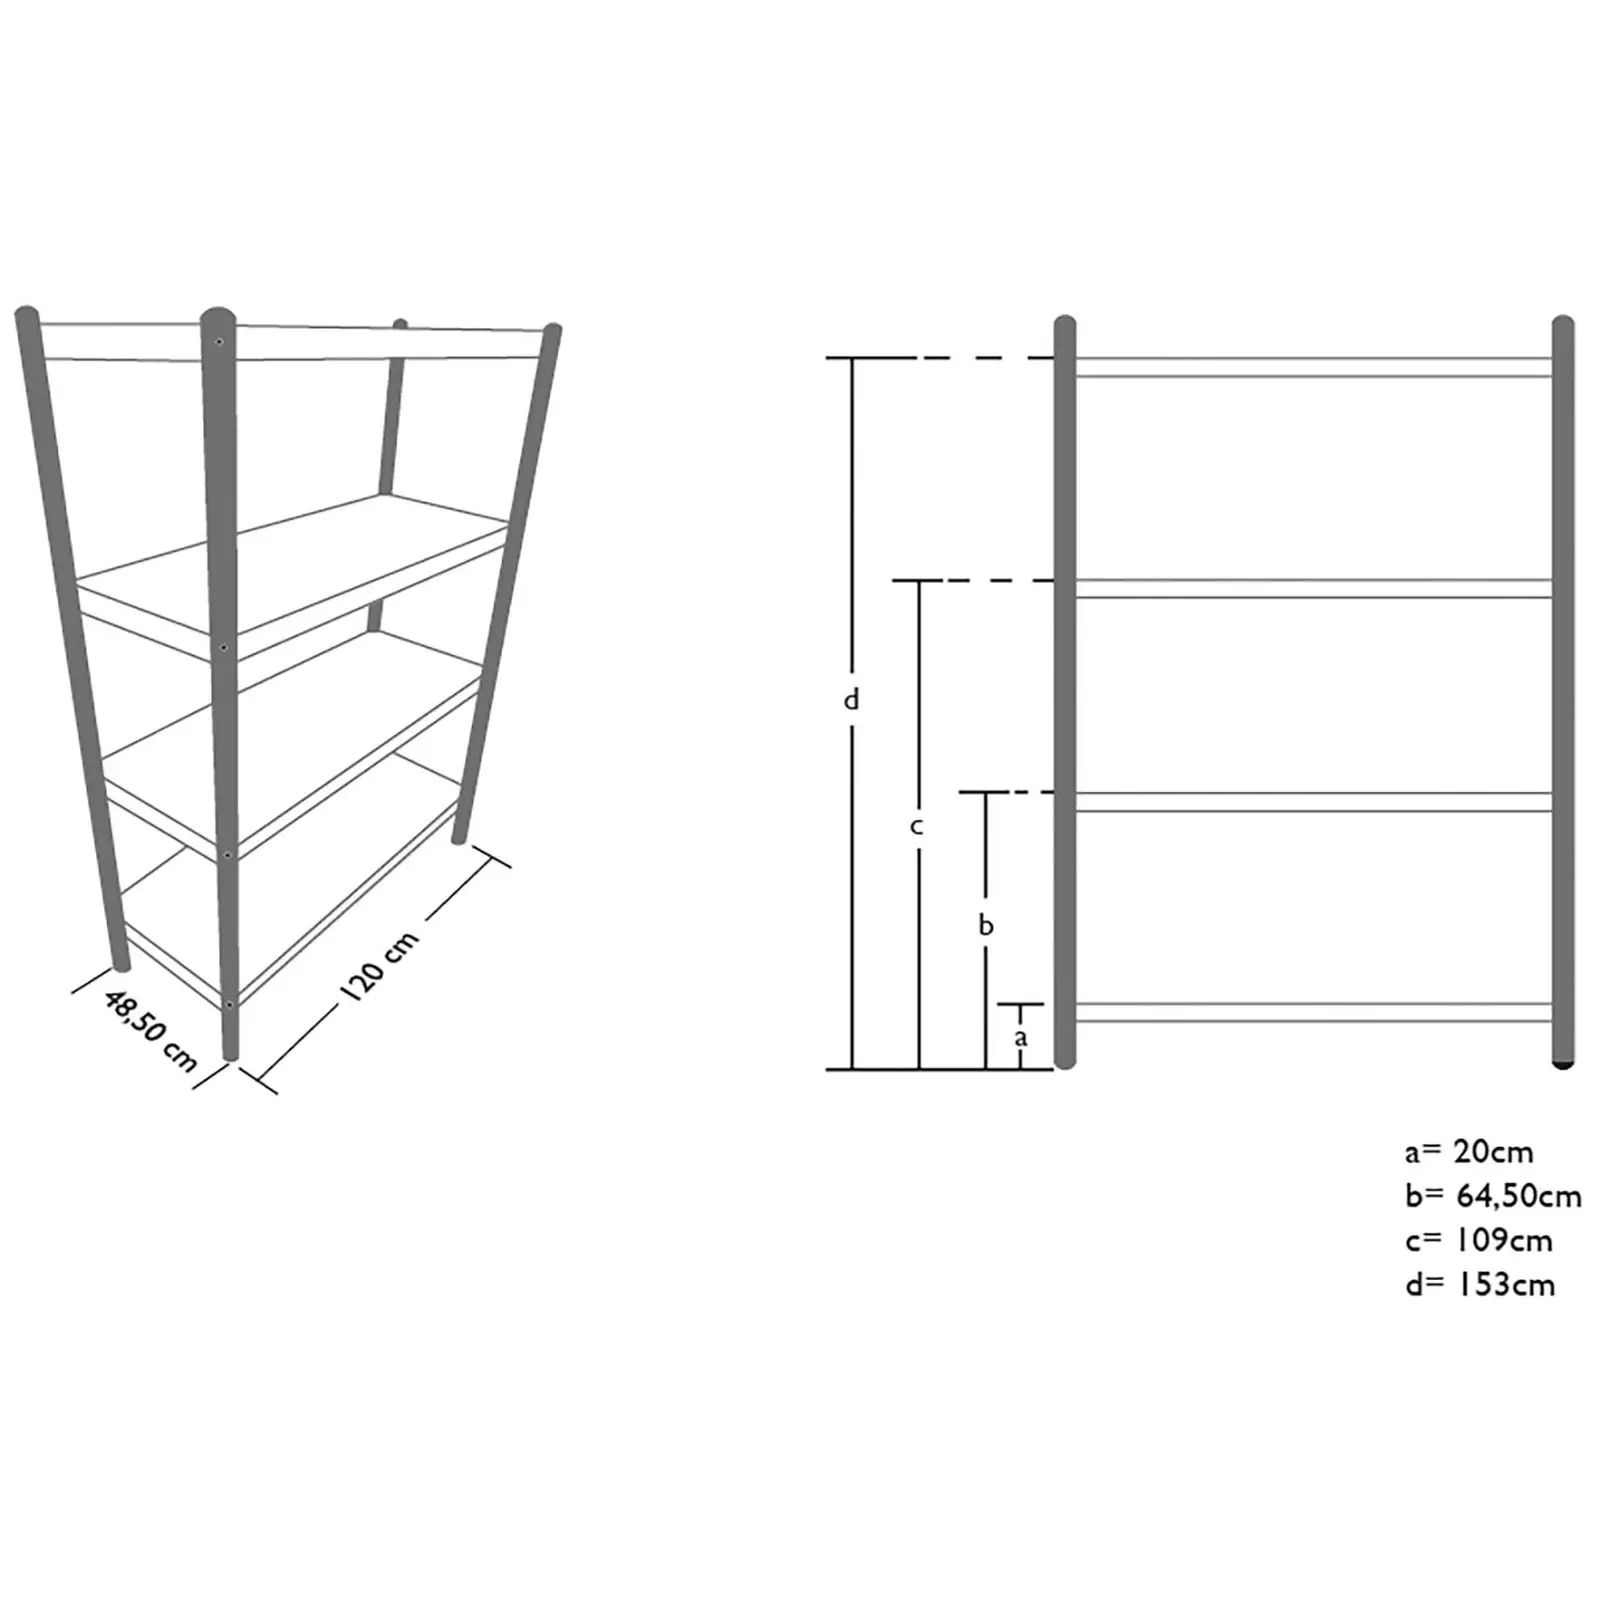 Stainless steel shelf - 120 cm